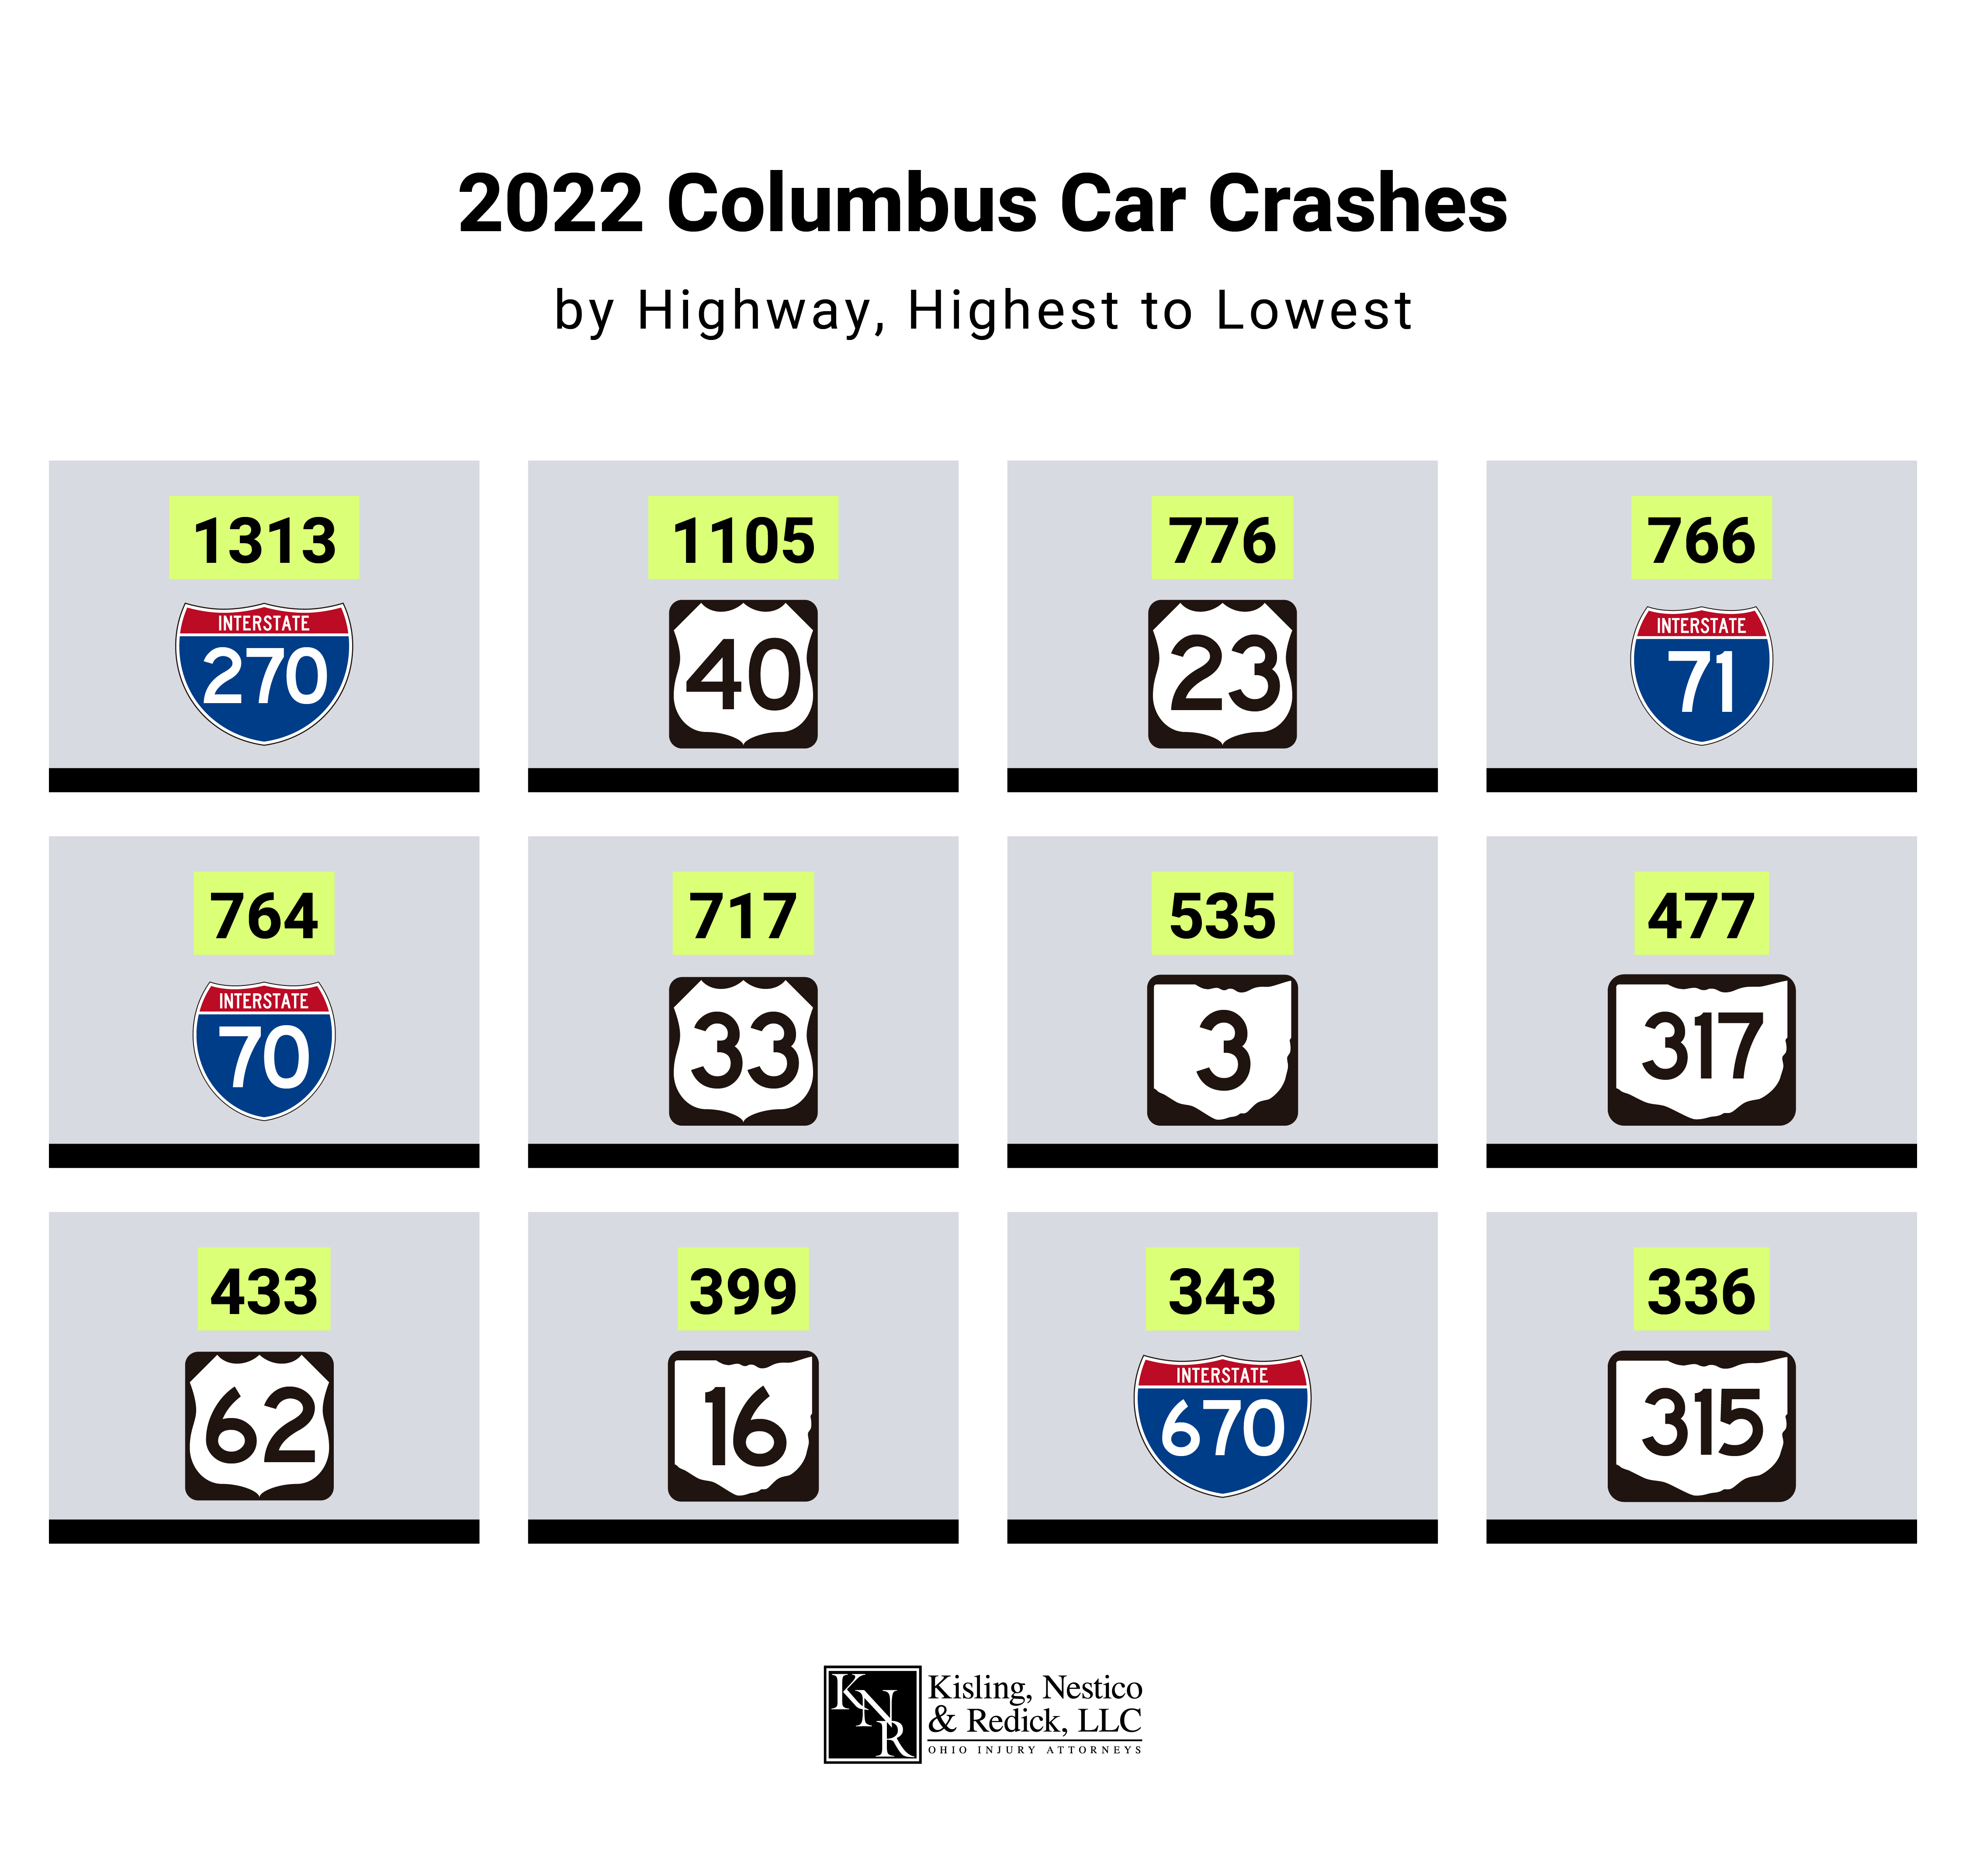 2022 Columbus car crash statistics by highway